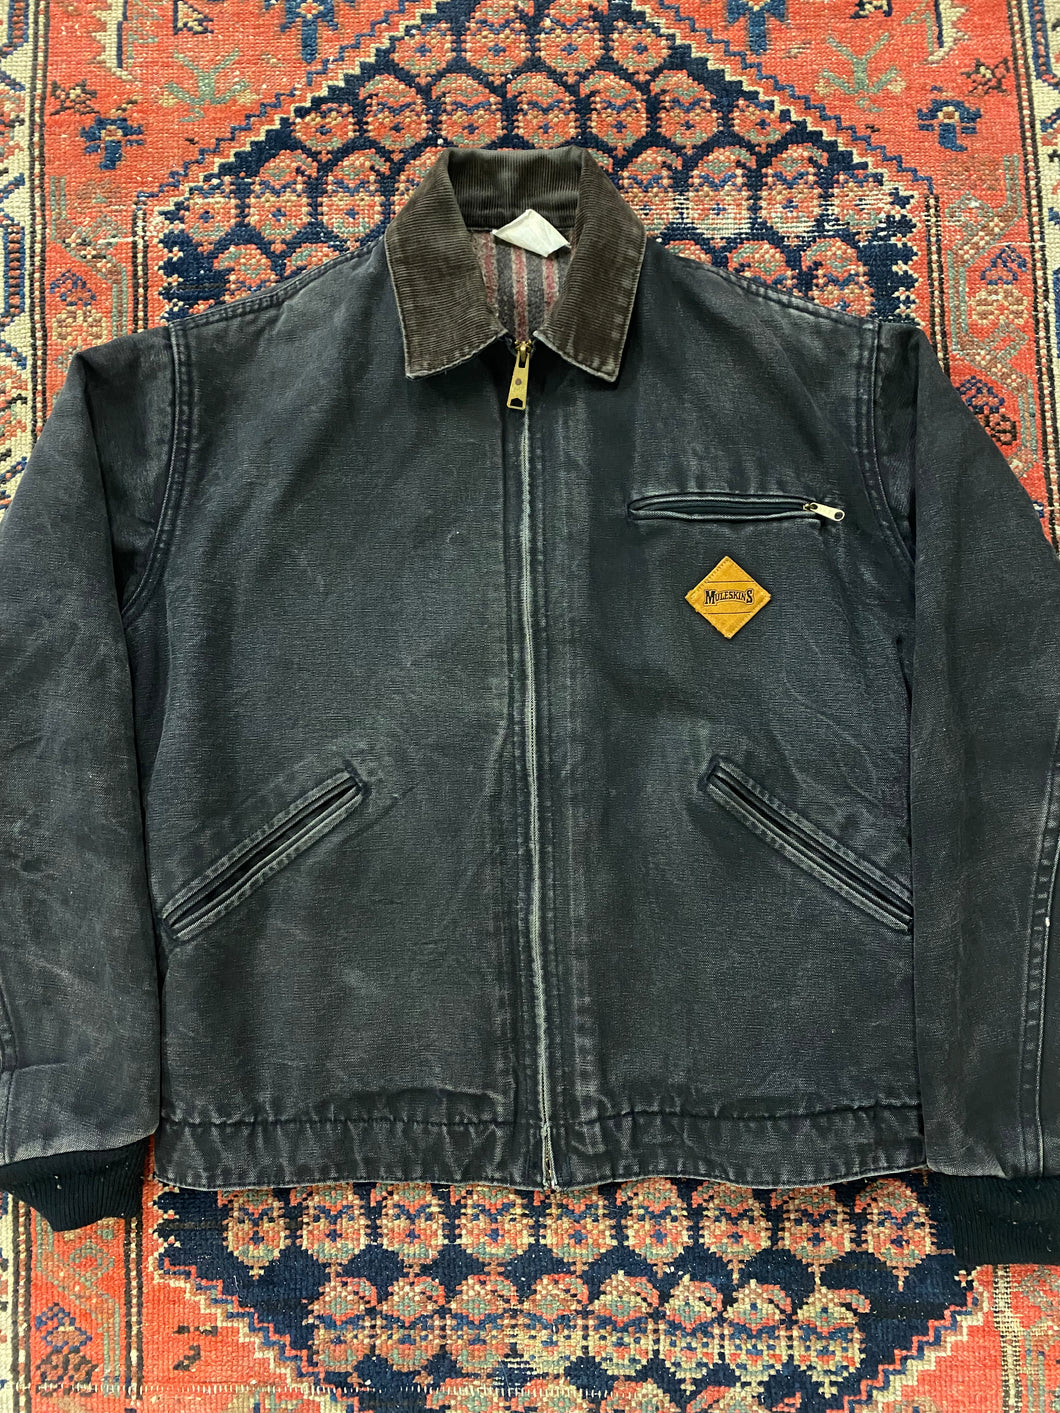 Vintage Work Jacket - S